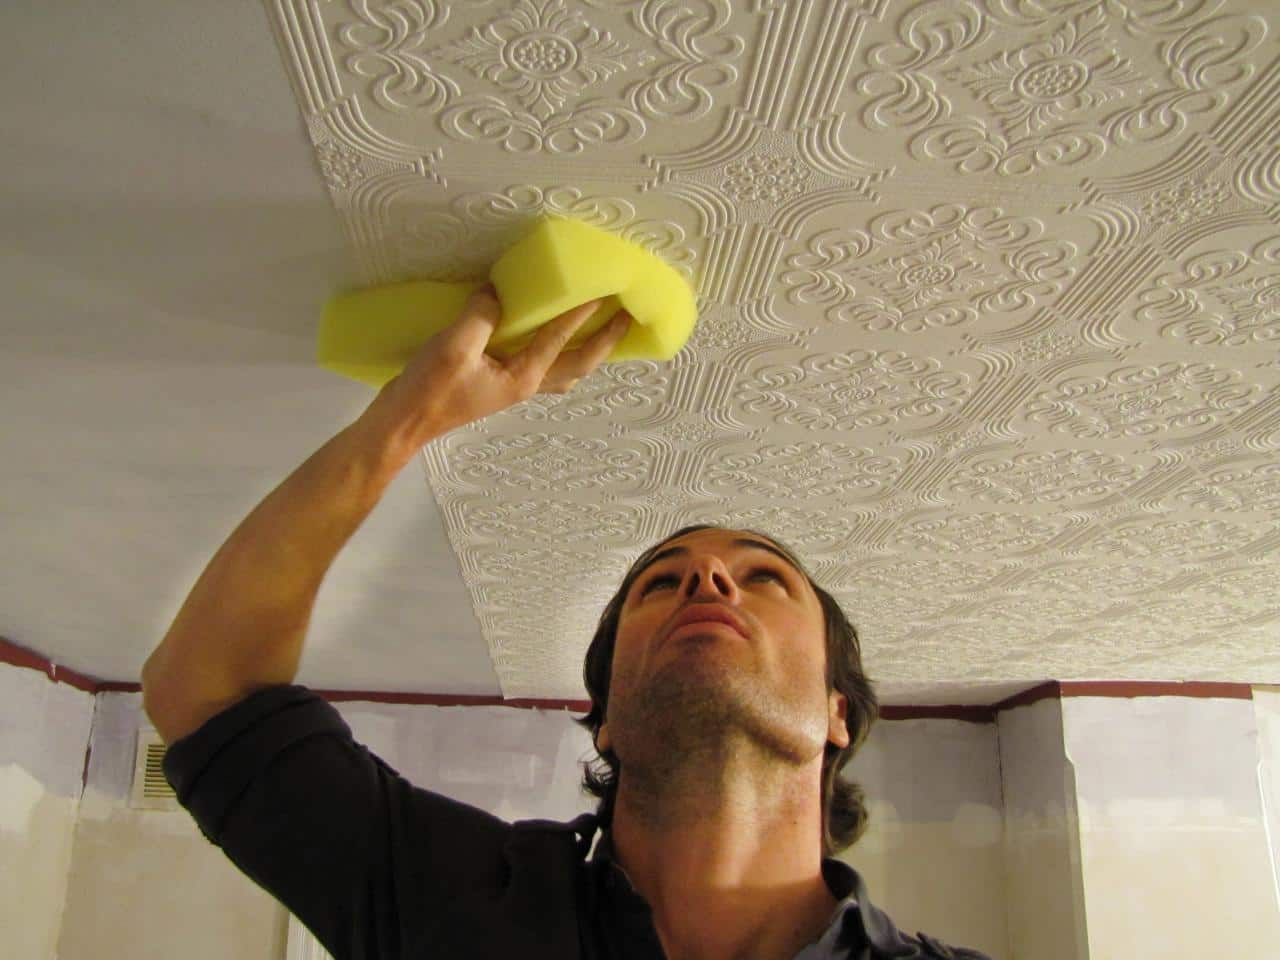 Embossed Wallpaper Install in Ceiling